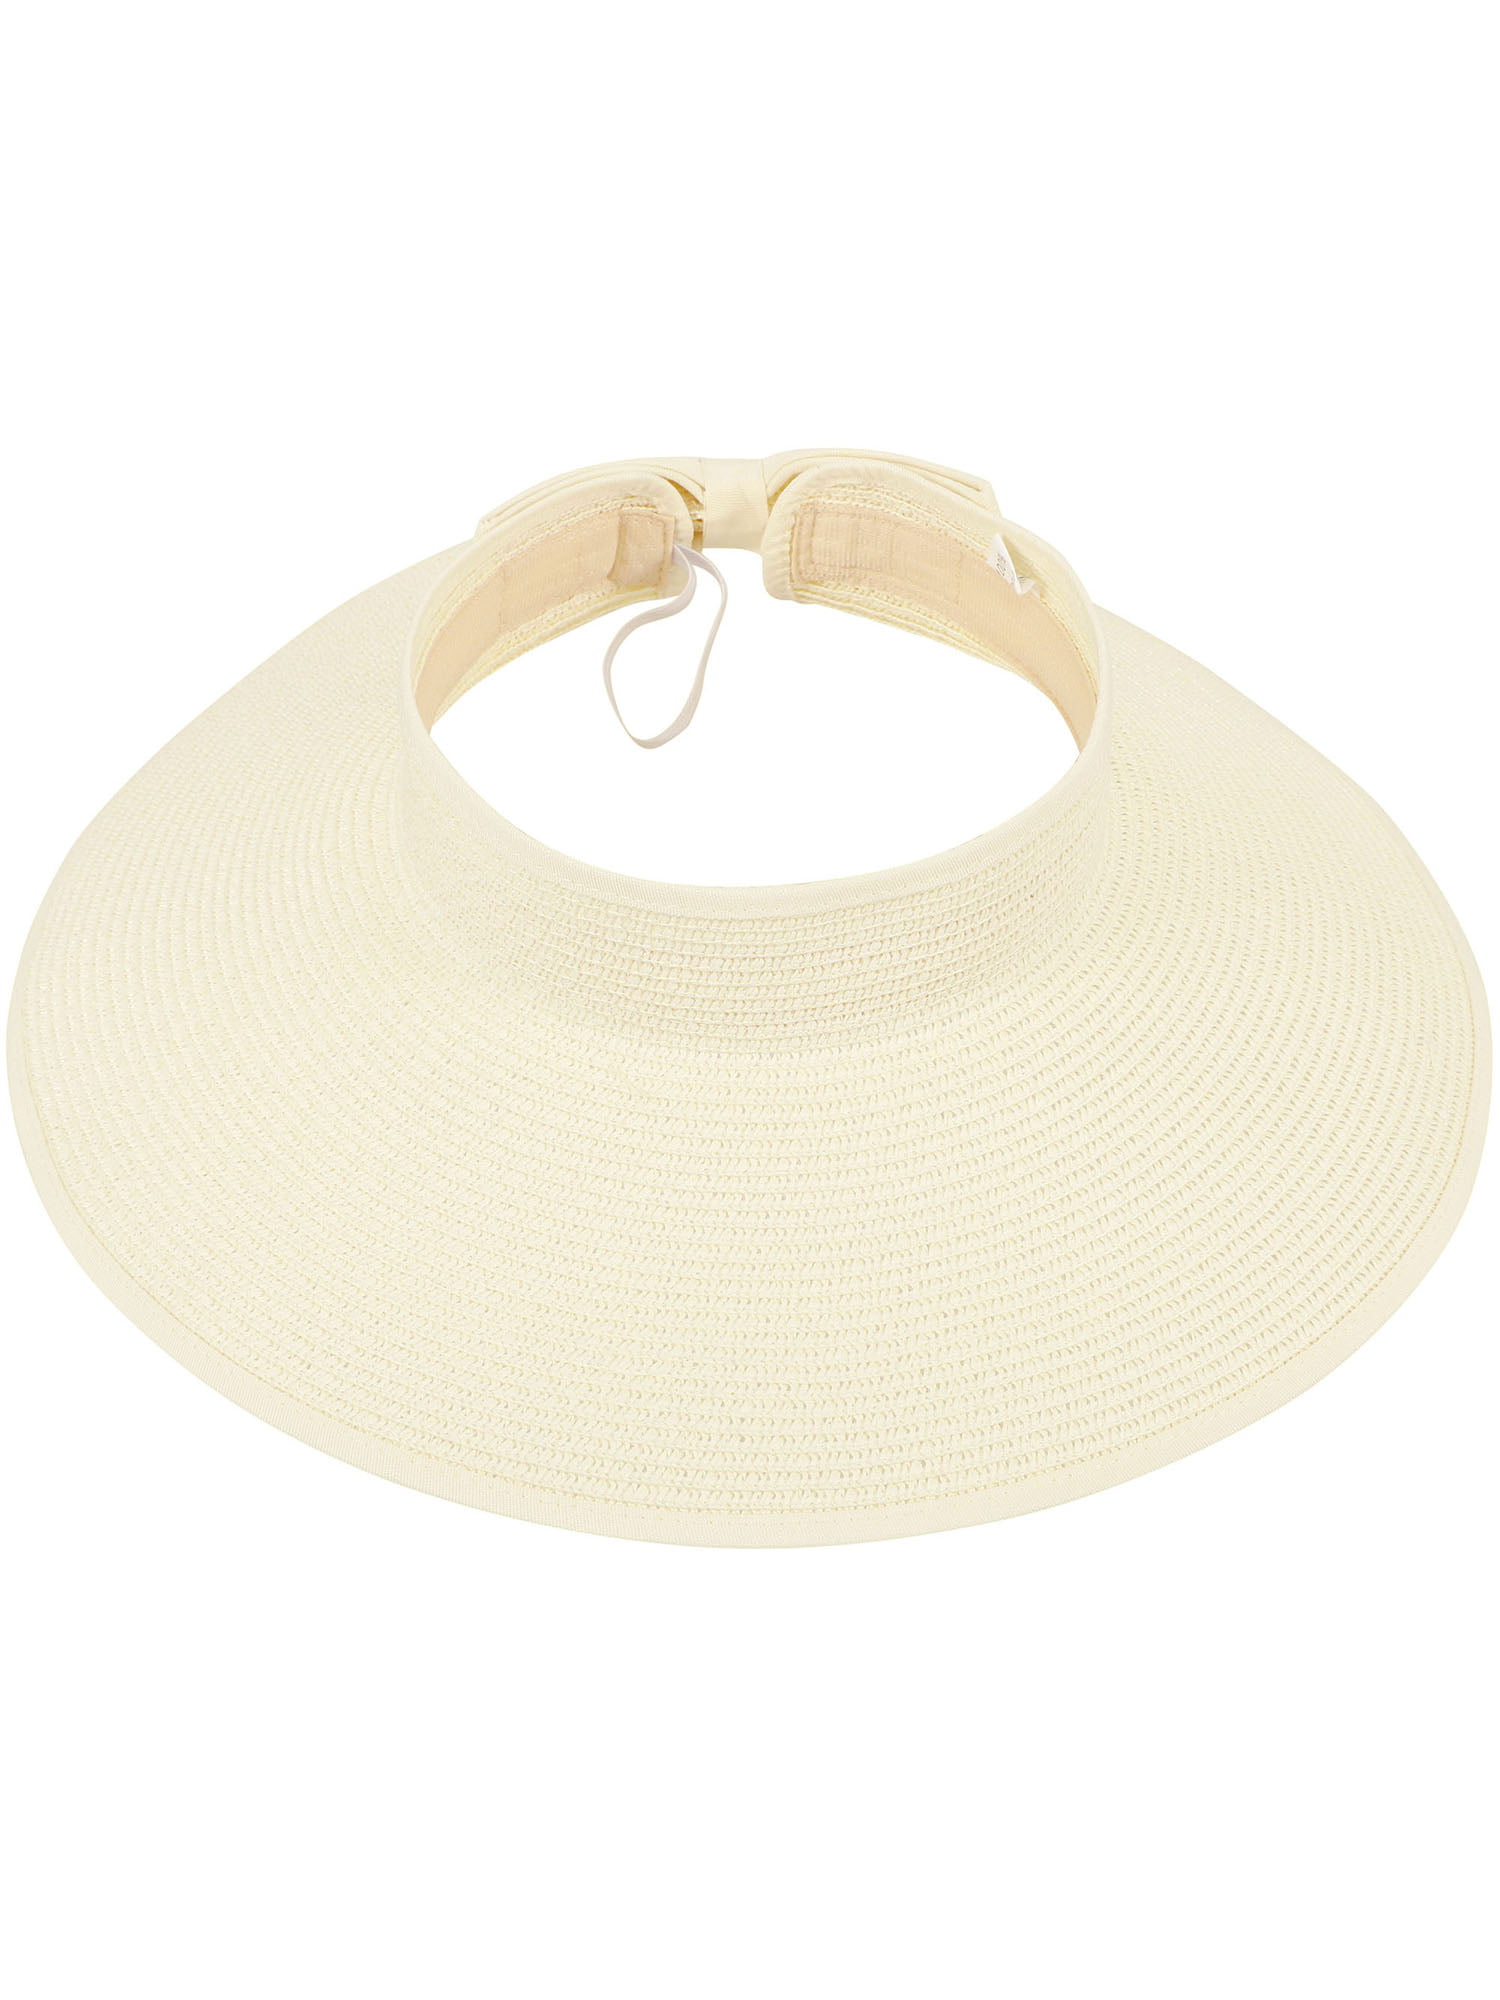 Swyss Women’s Summer Foldable Straw Sun Visor w/Cute Bowtie Hat Wide Brim Travel Hat Freesize Ponytail Fashion 